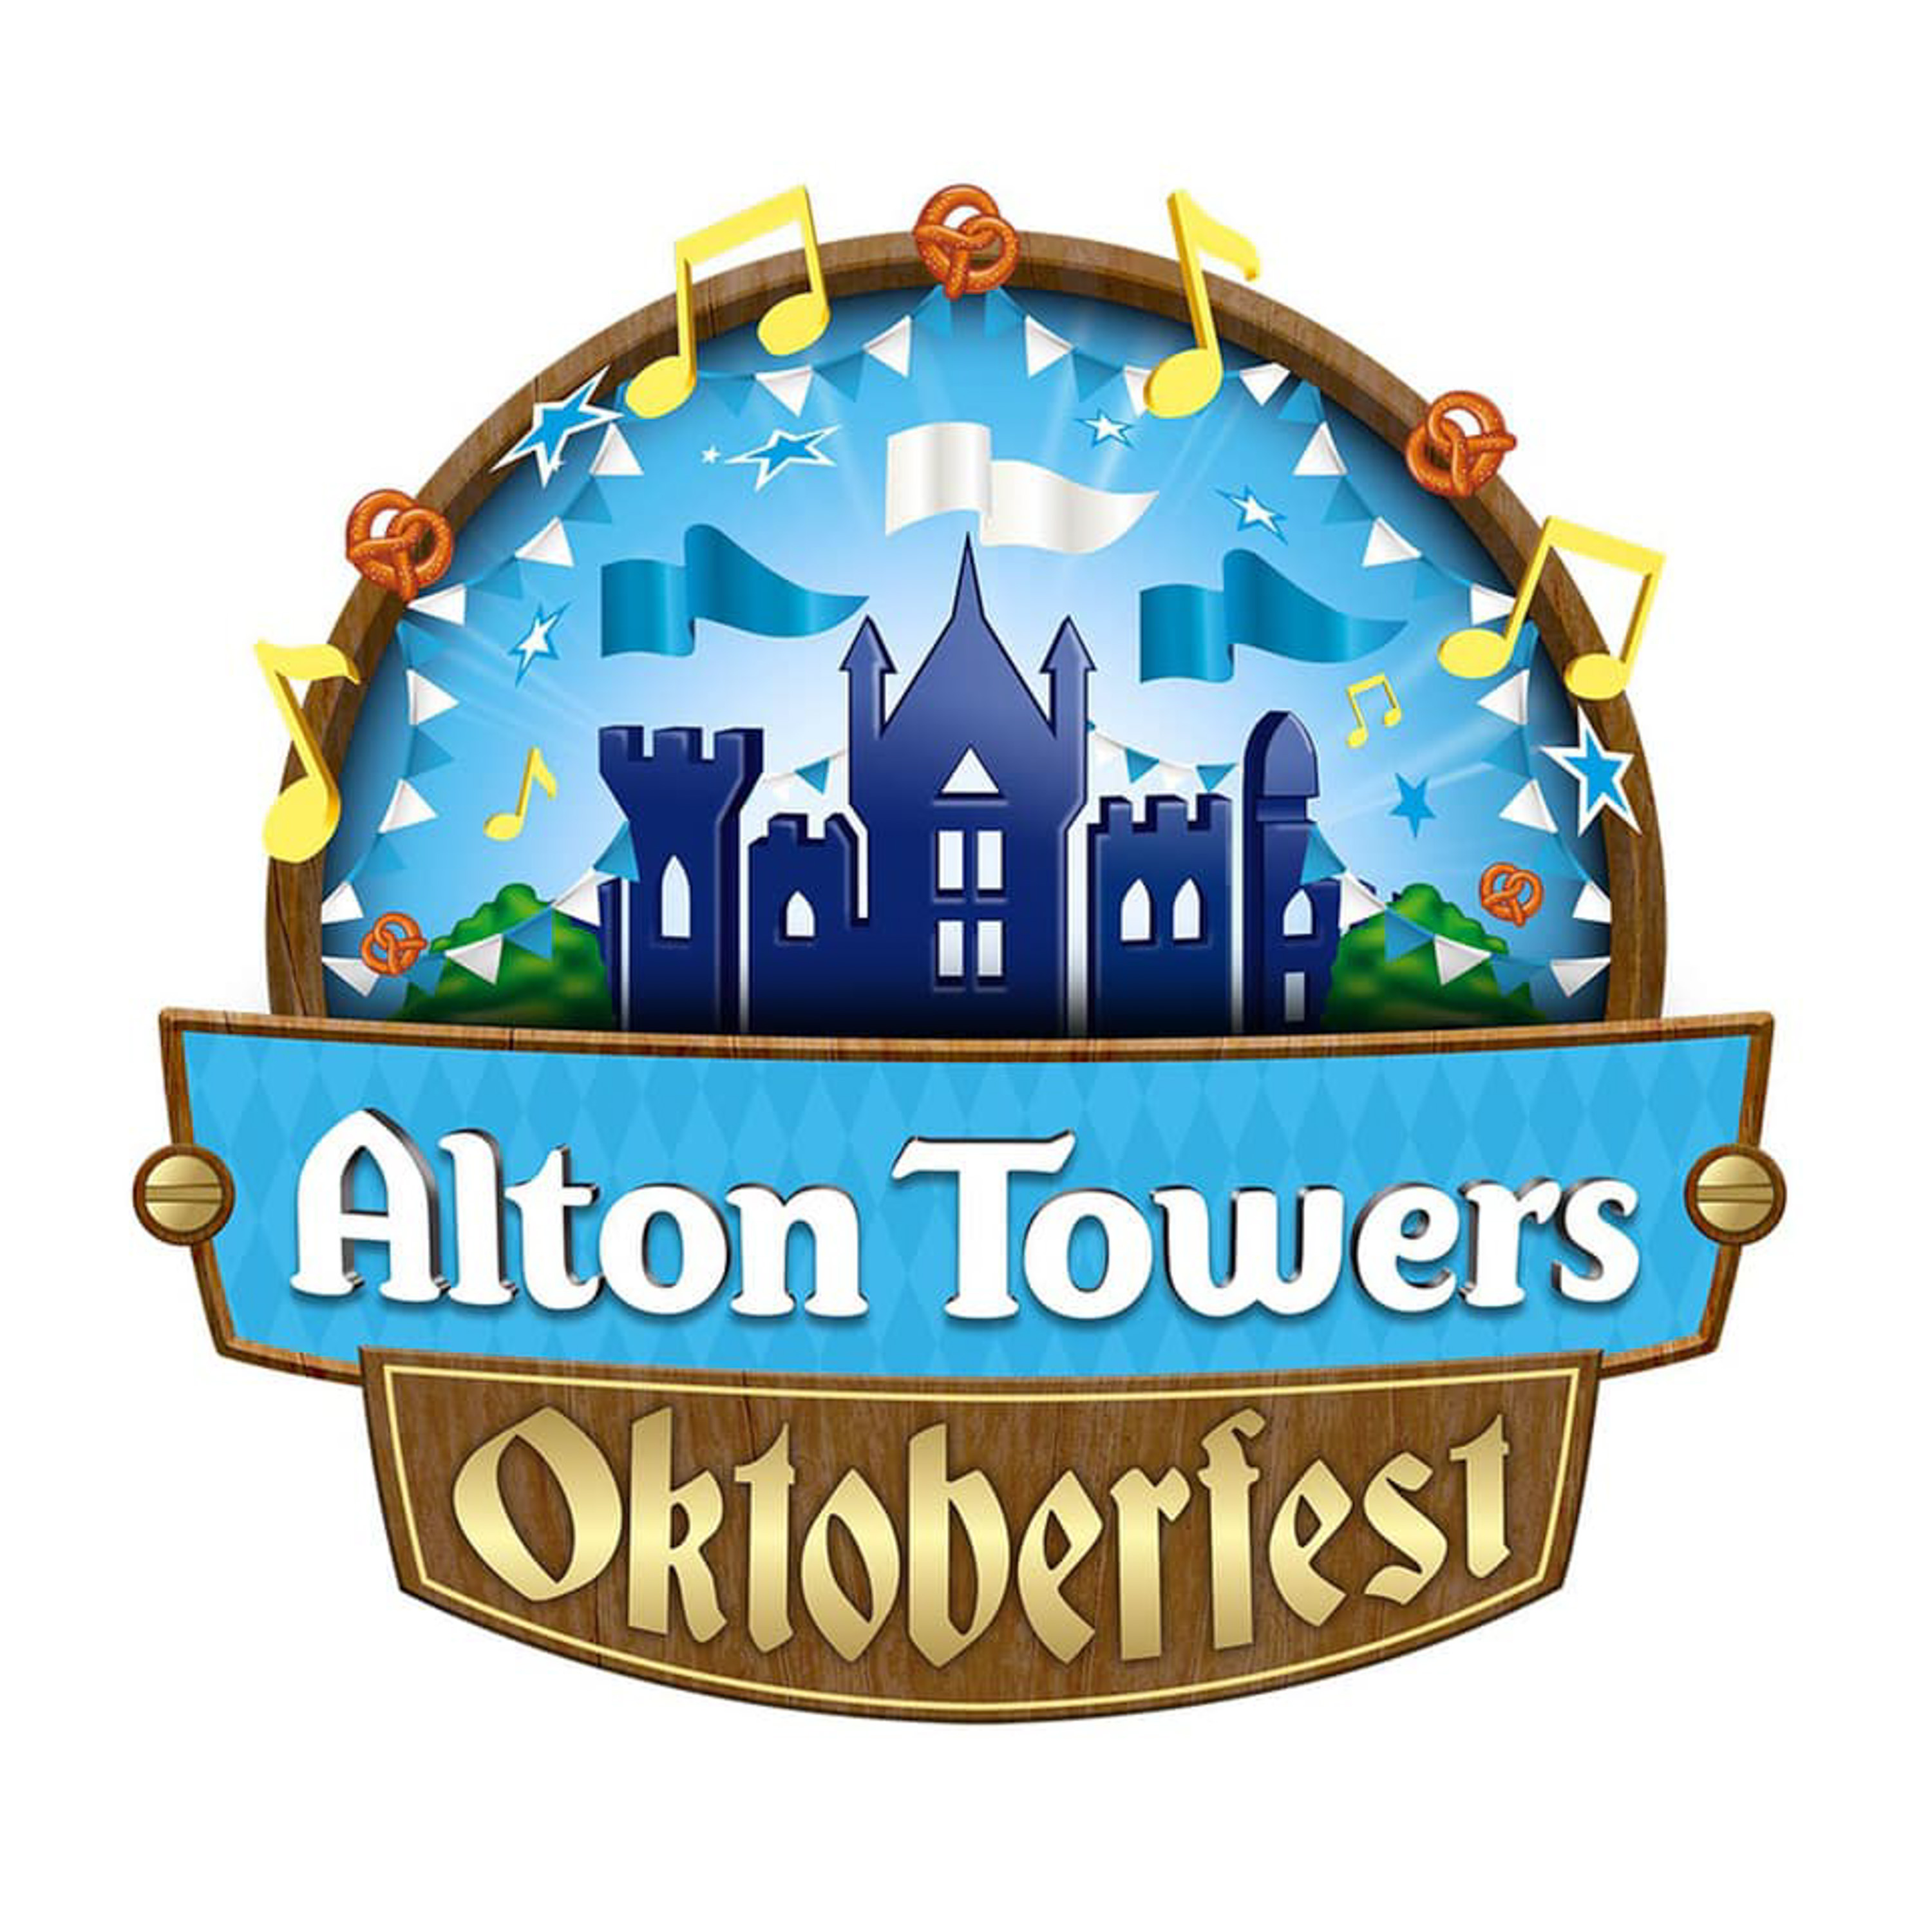 Alton Towers Oktoberfest